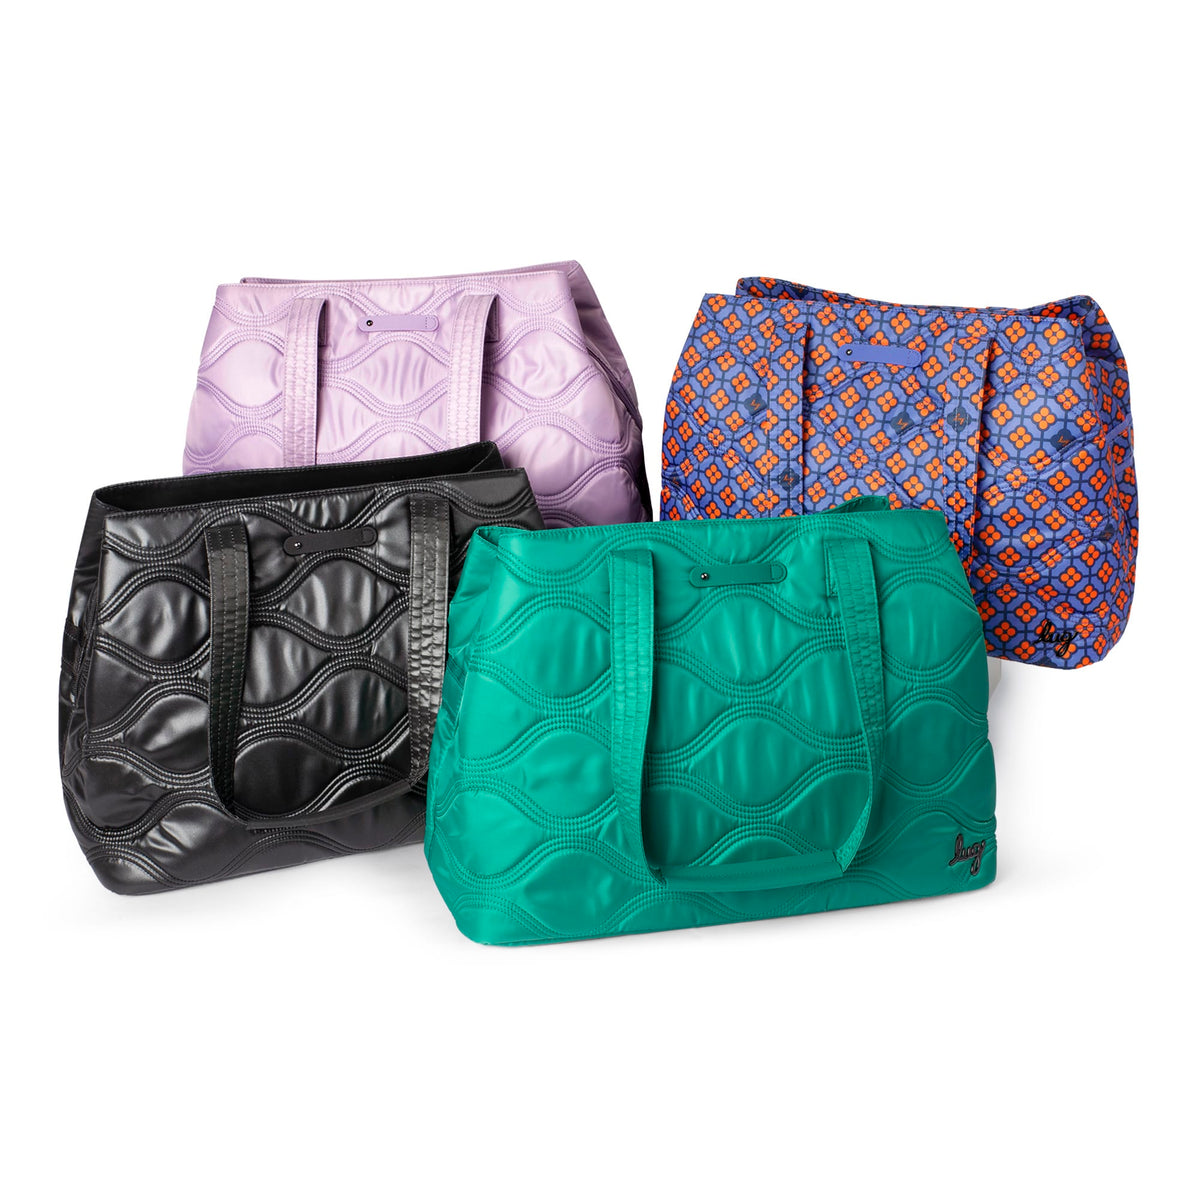 Lug Bag Charm Tote Bags for Women